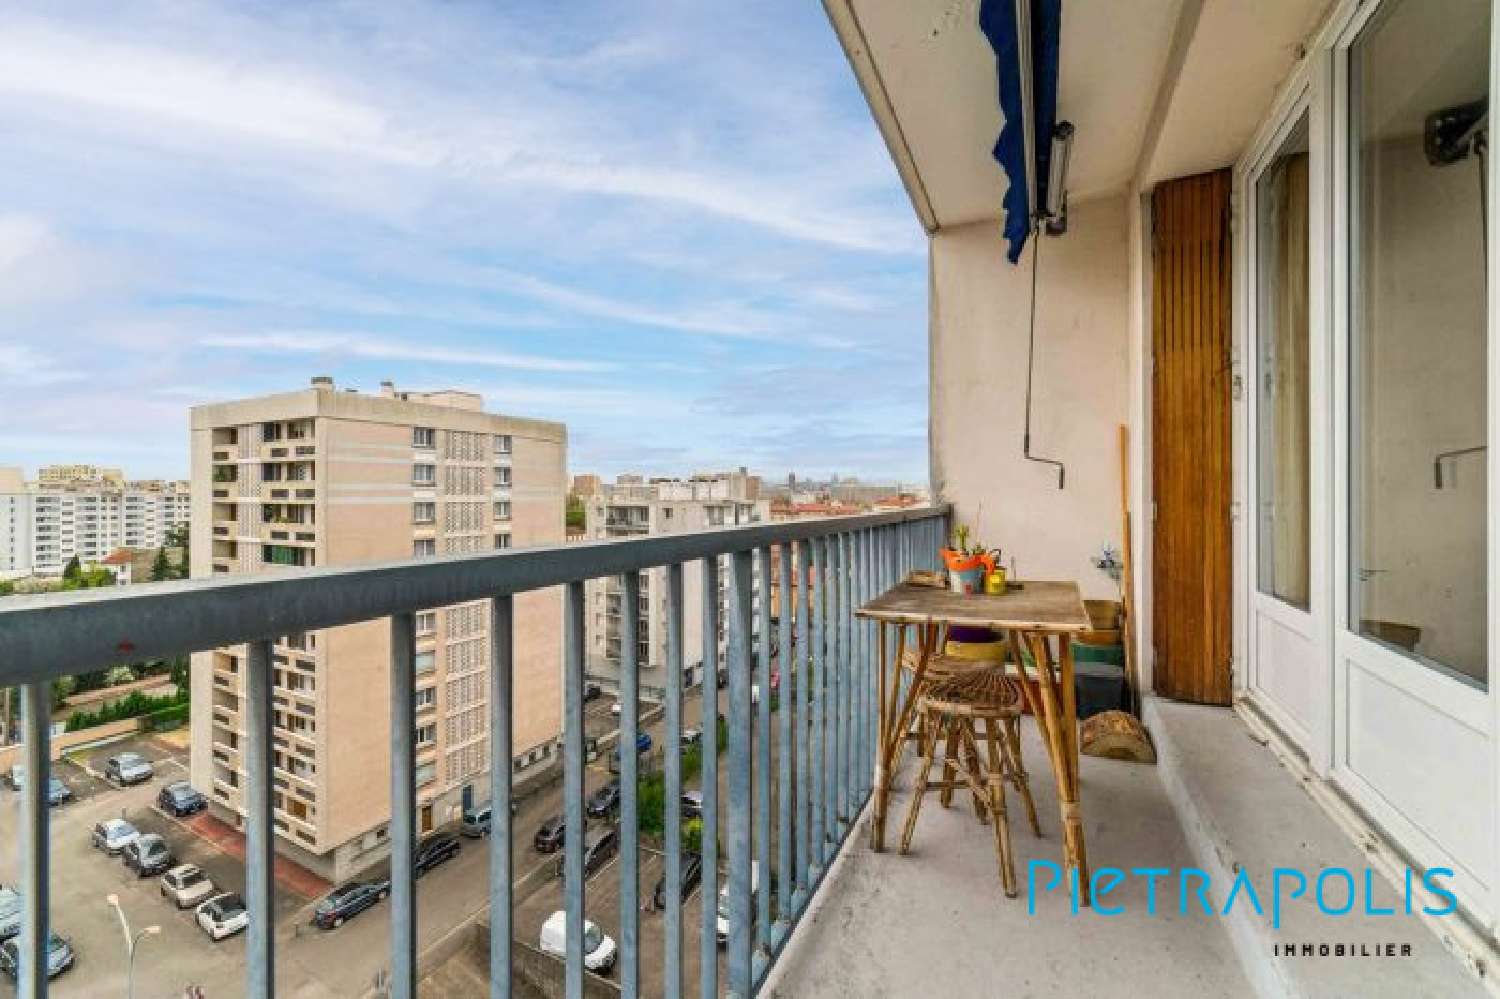  à vendre appartement Villeurbanne Rhône 5